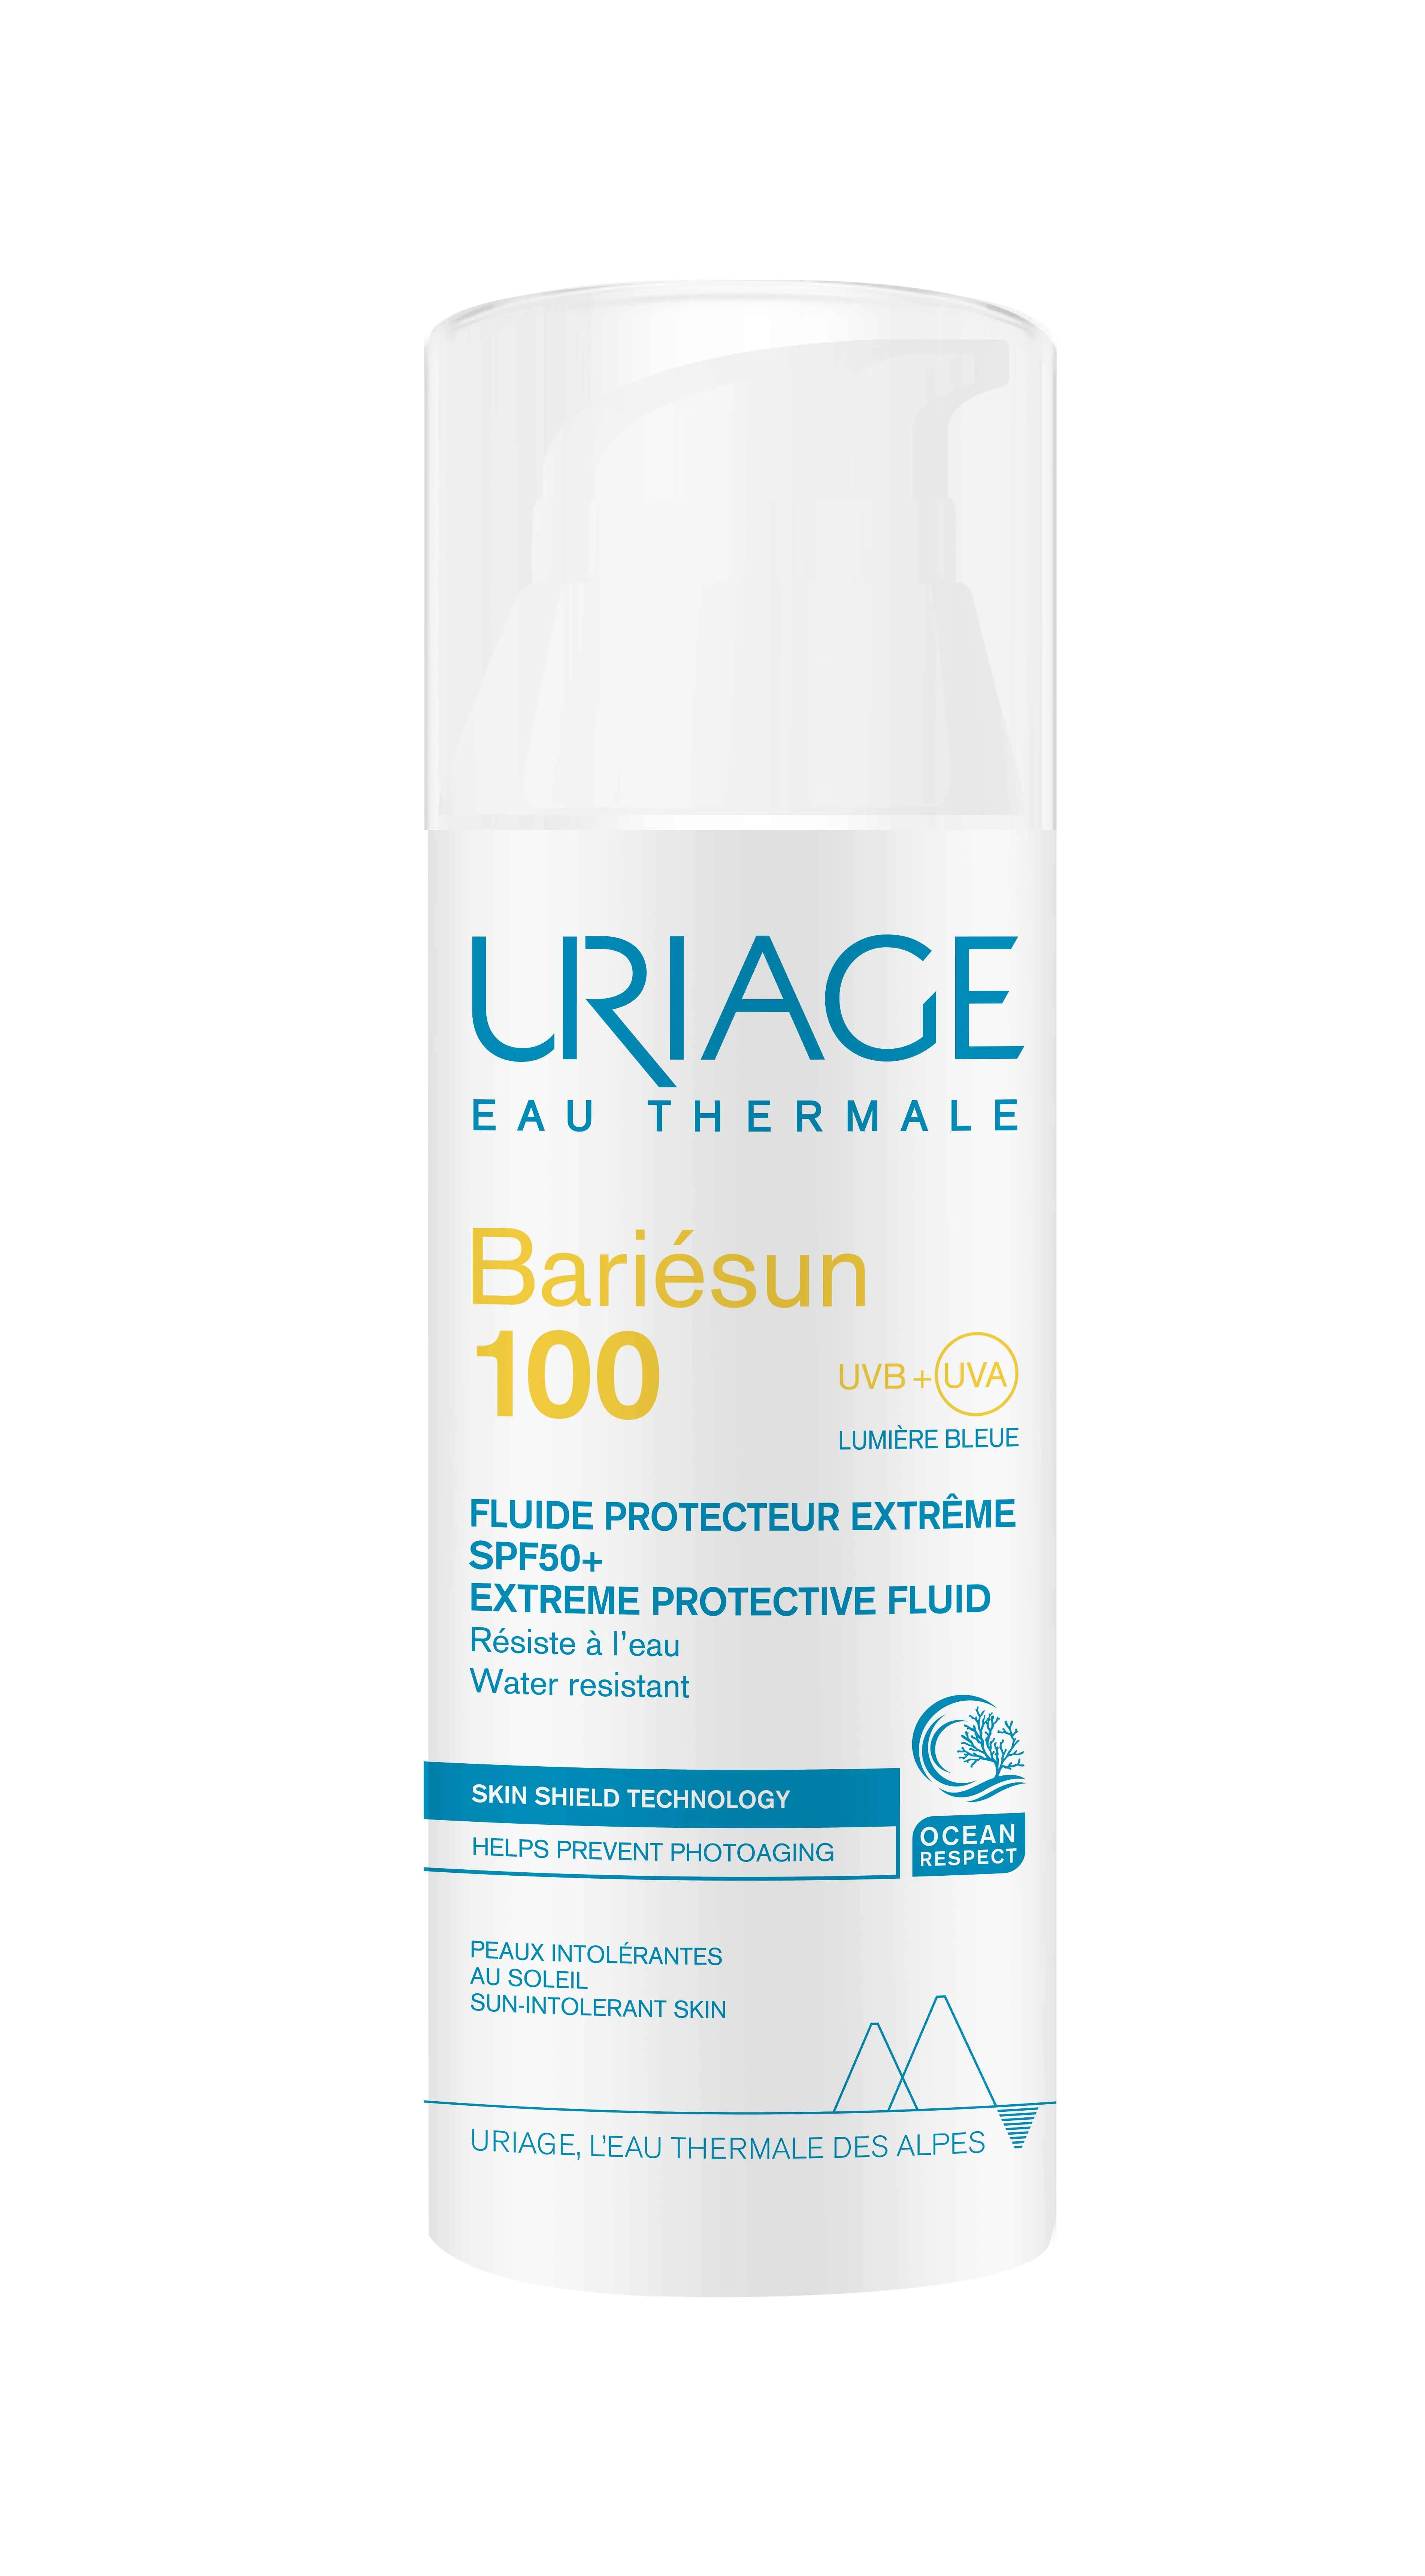 URIAGE BARIÉSUN 100 Extreme Protective Fluid SPF50+, 50ml 1×50 ml, opaľovací krém pre pokožku intolerantnú na slnko